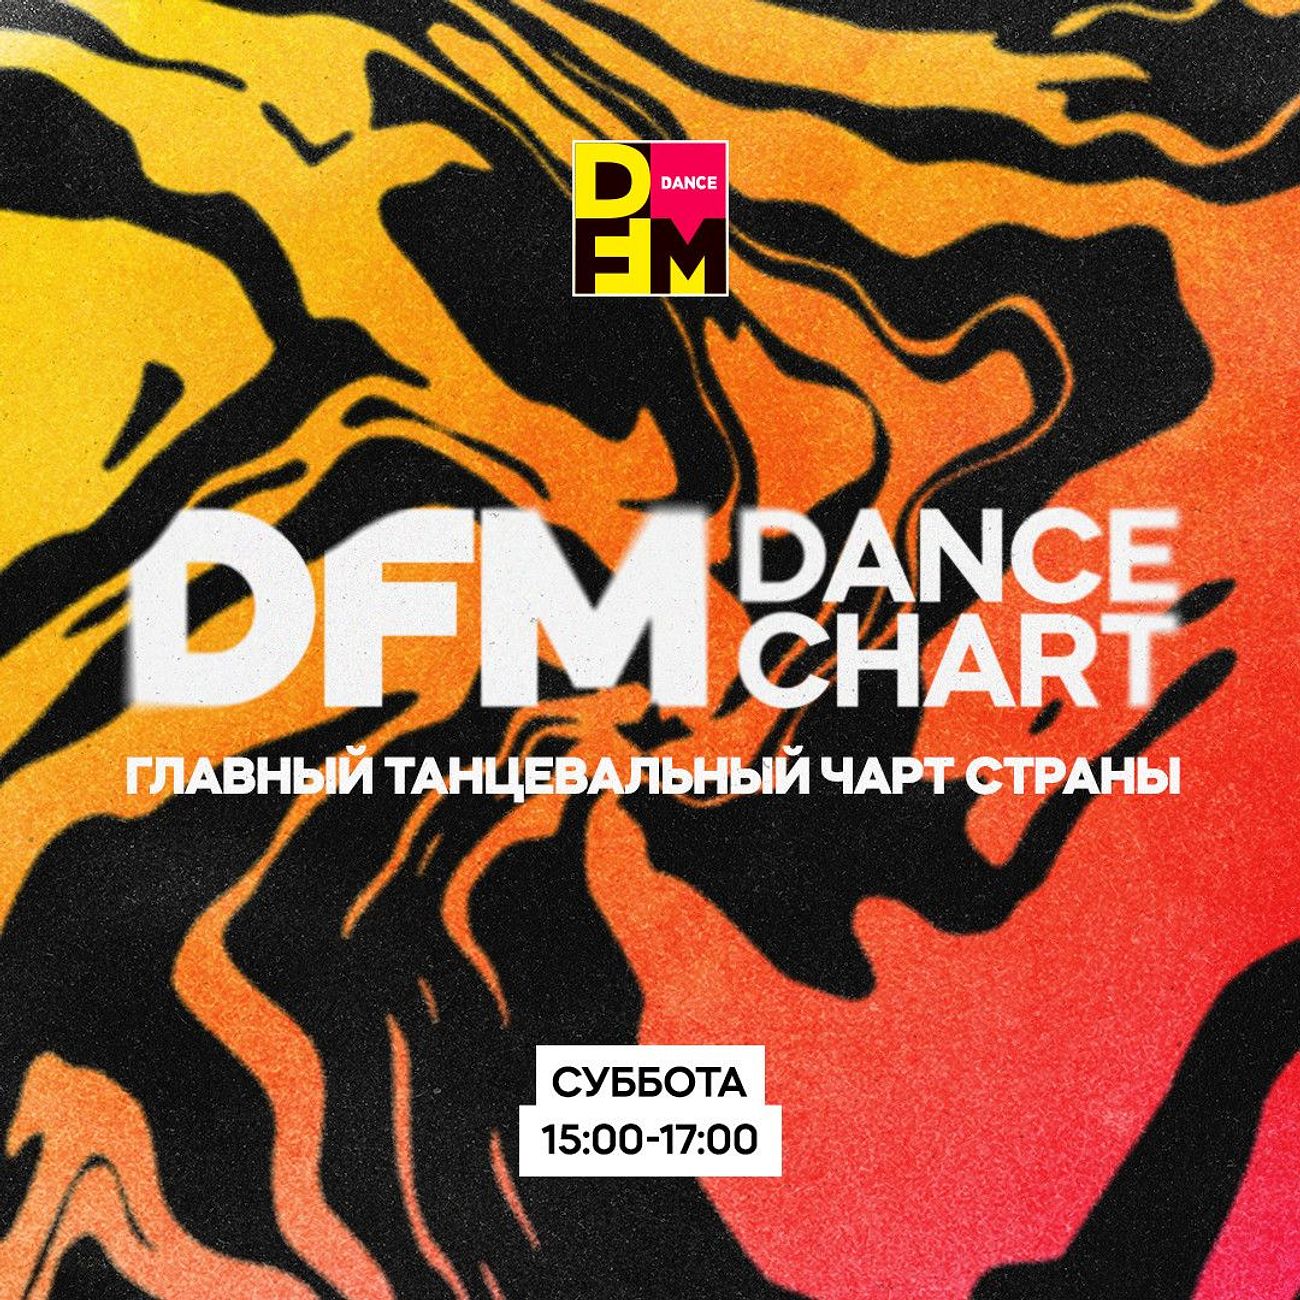 DFM DANCE CHART